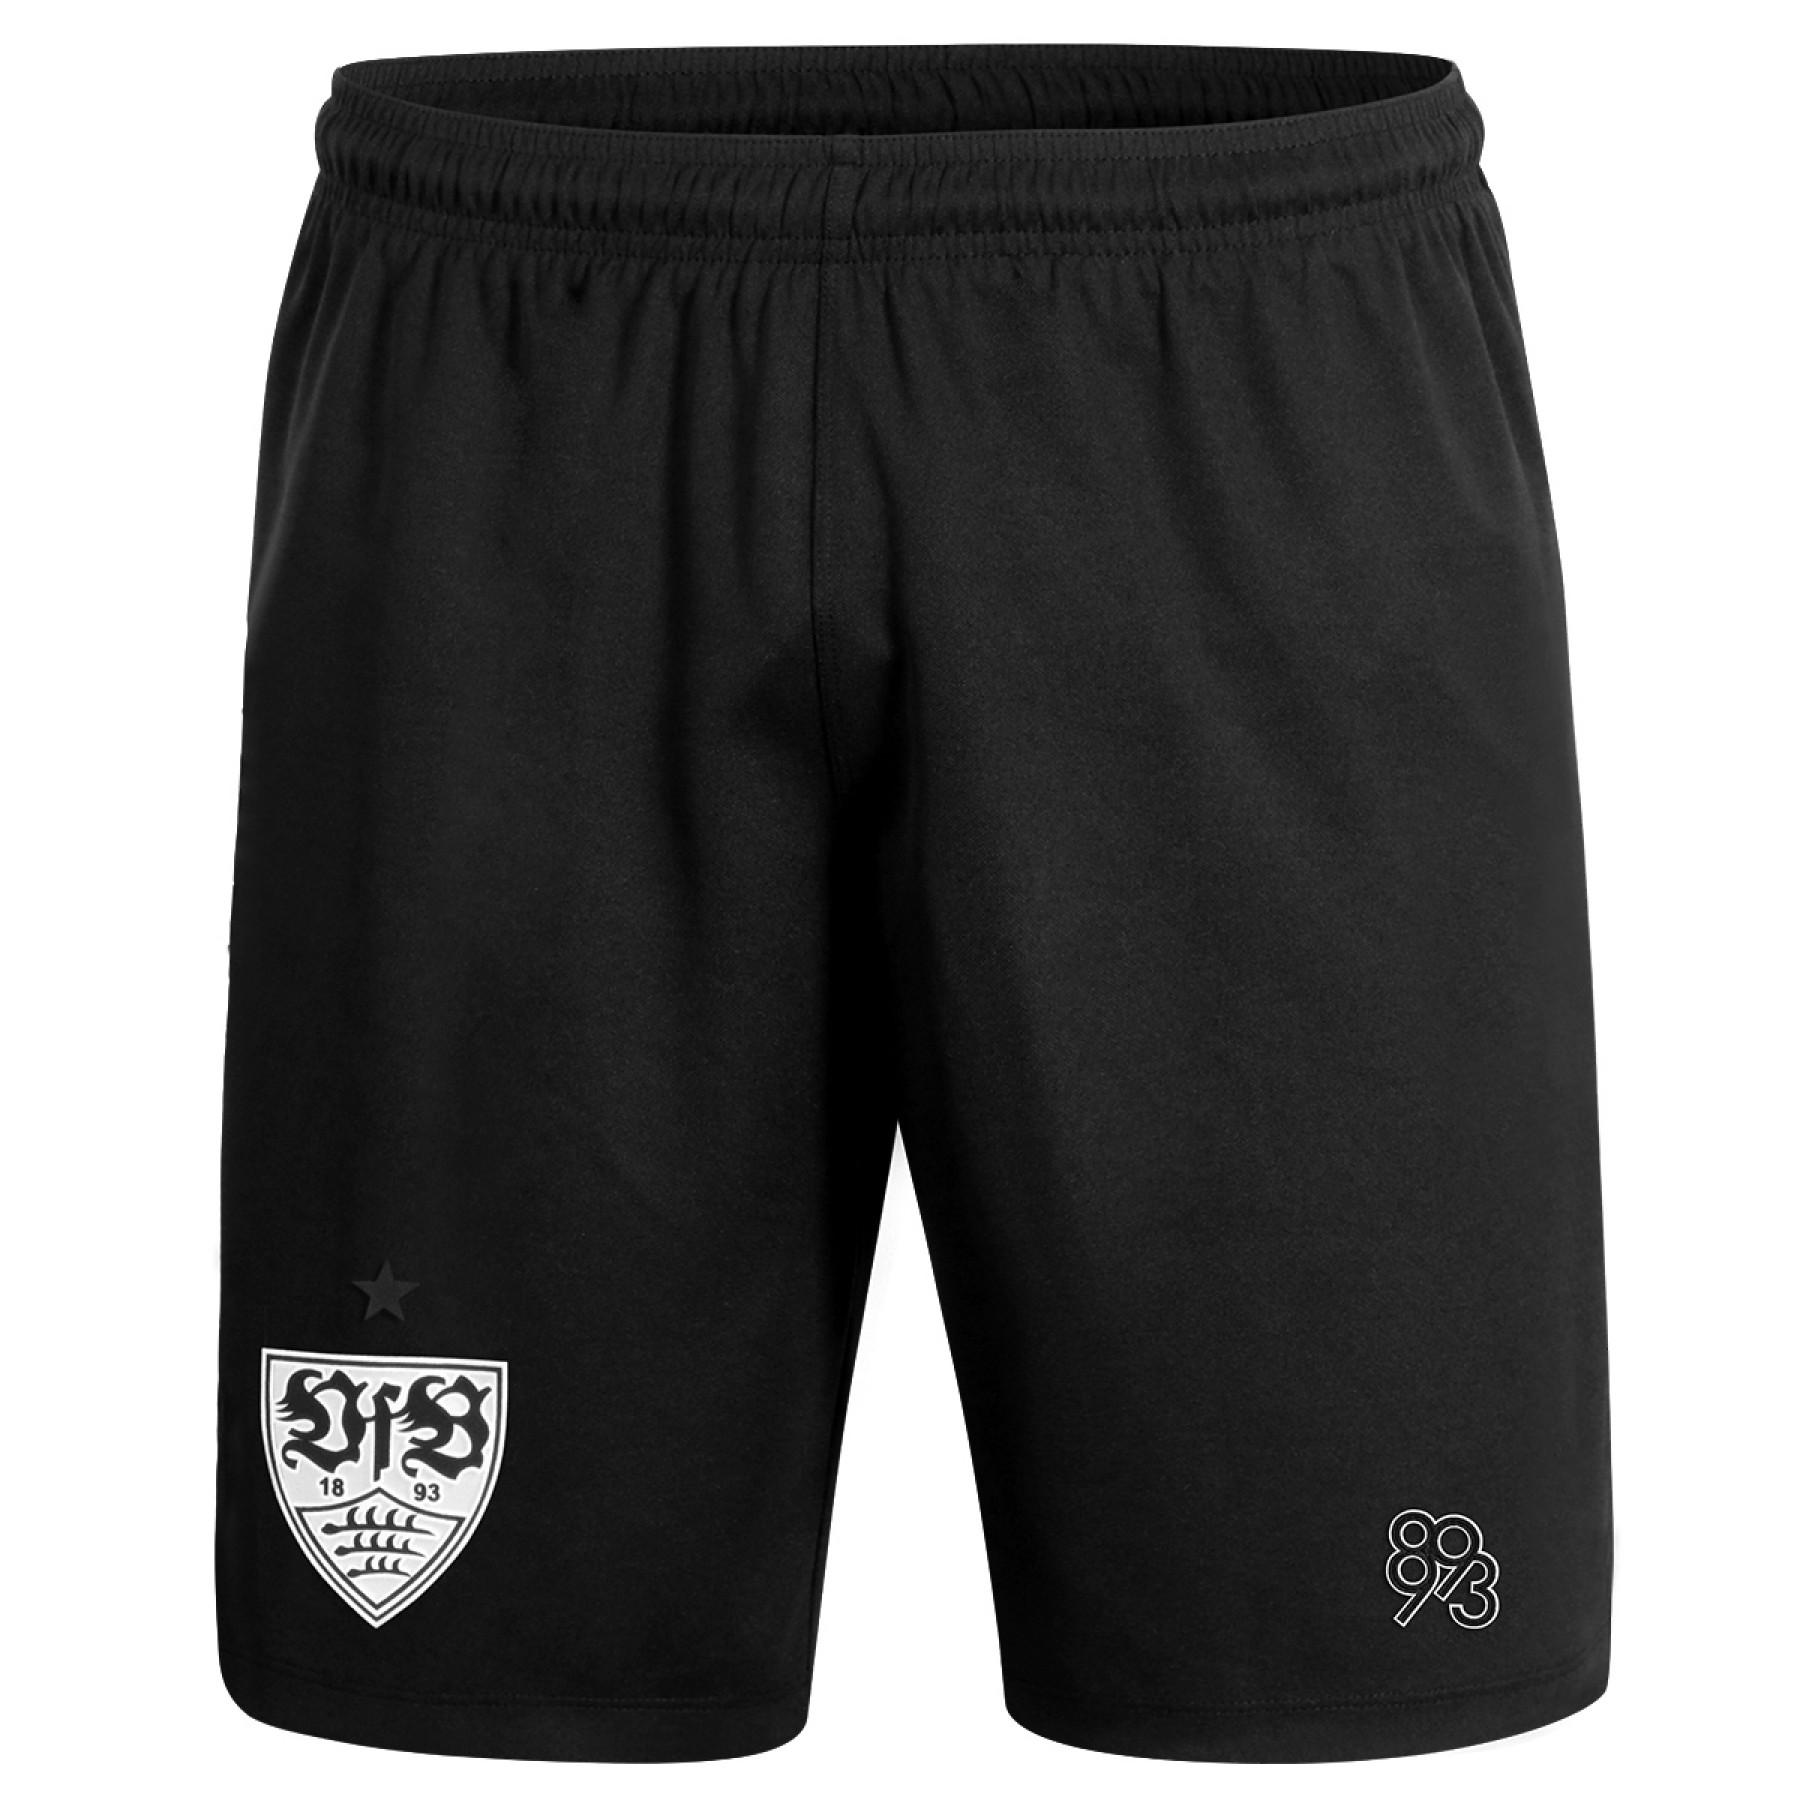 Kinder shorts VfB Stuttgart 2019/20